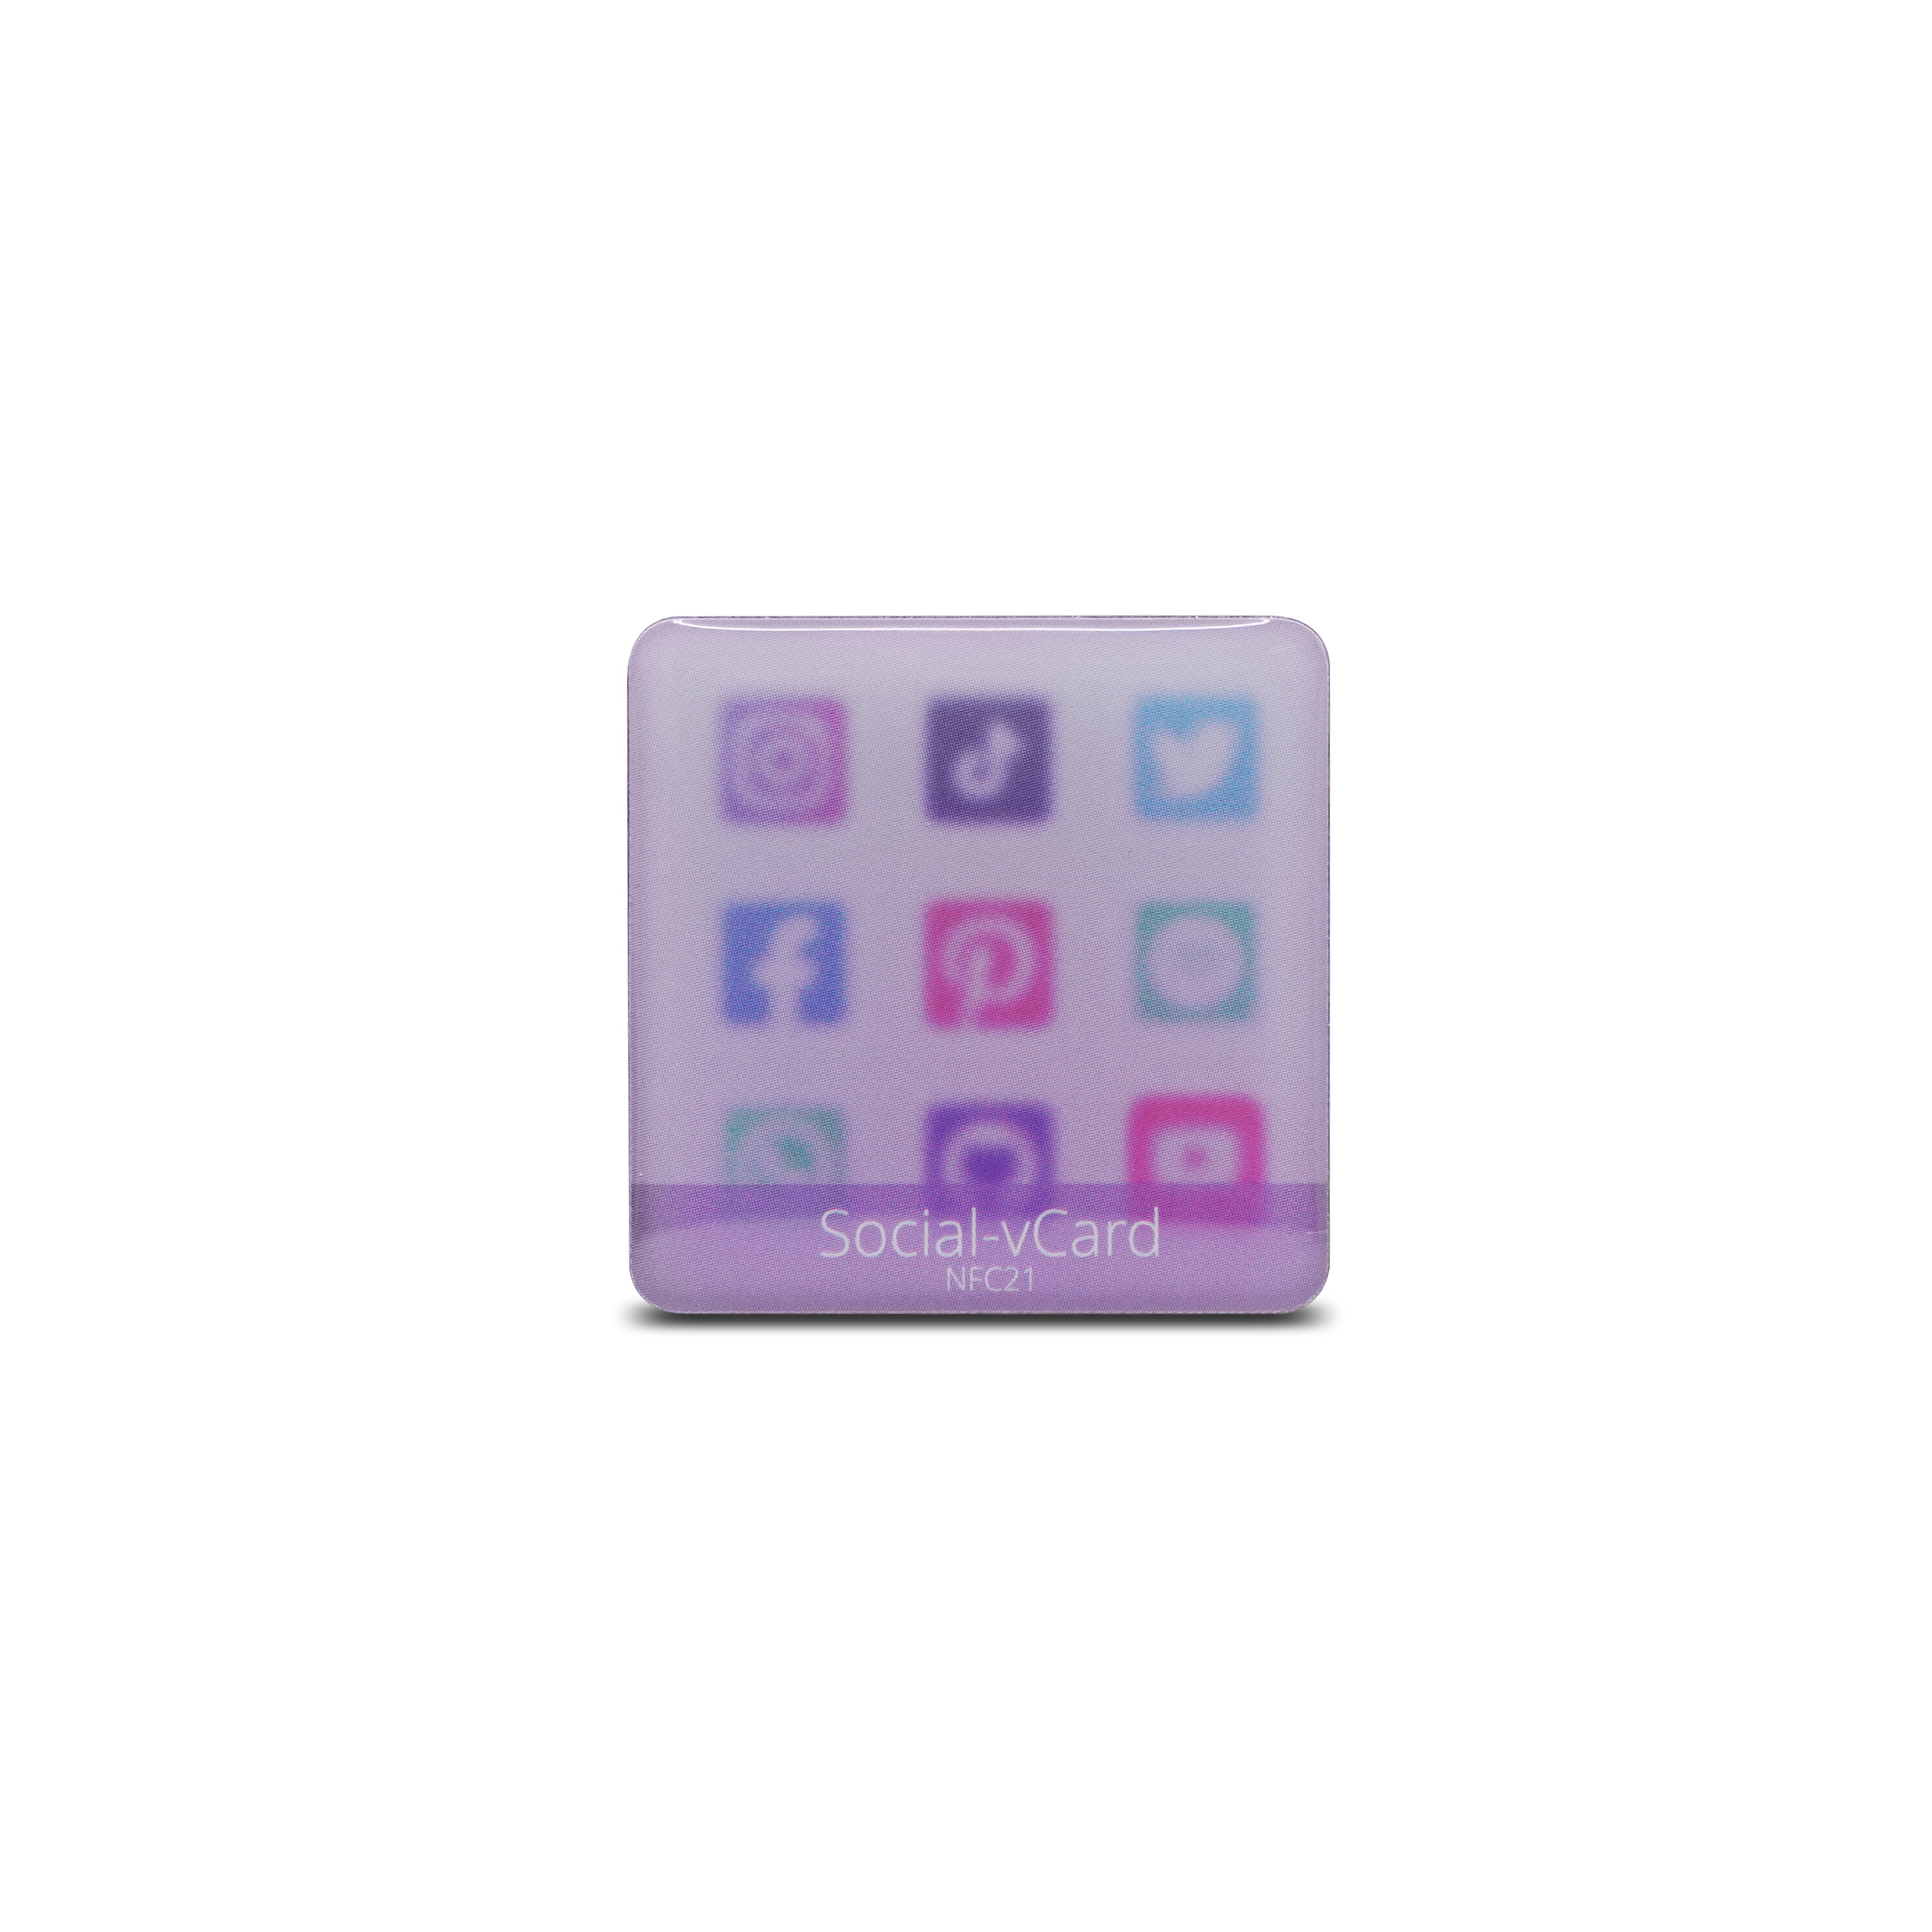 Social-vCard Glow - Digitaler Social Media Sticker - PET  - 35 x 35 mm - pink